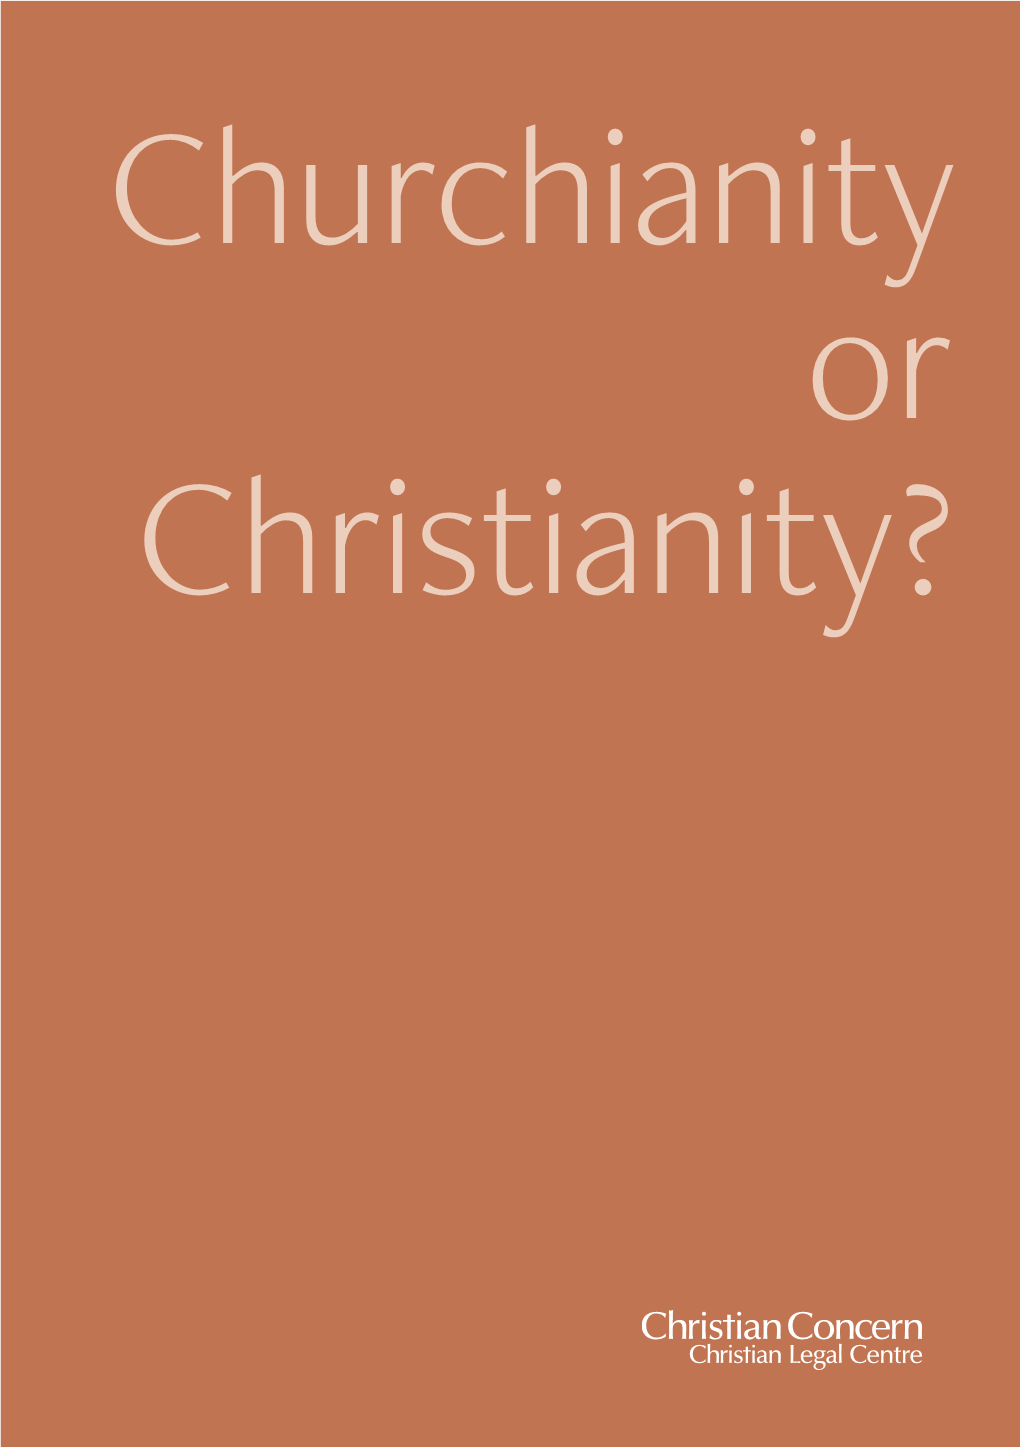 Churchianity Booklet